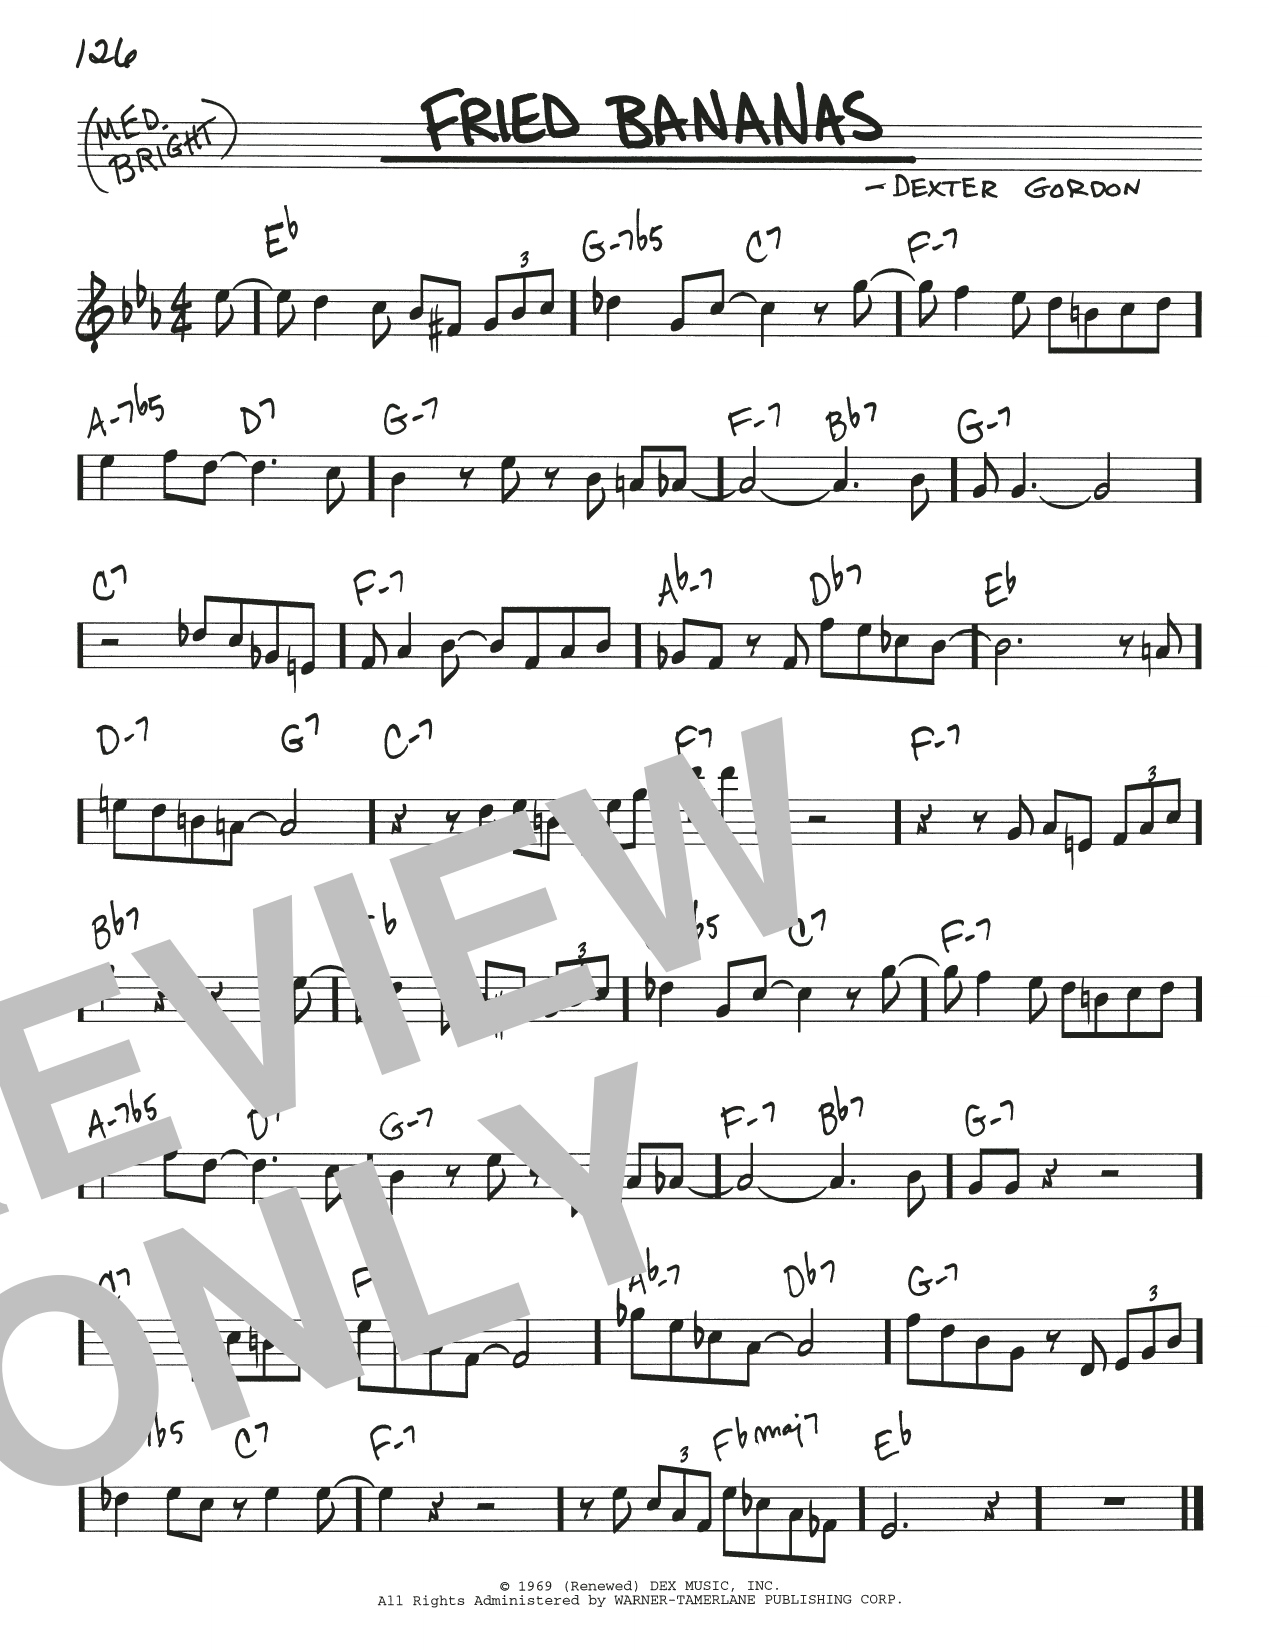 Dexter Gordon Fried Bananas Sheet Music Notes & Chords for Real Book – Melody & Chords - Download or Print PDF